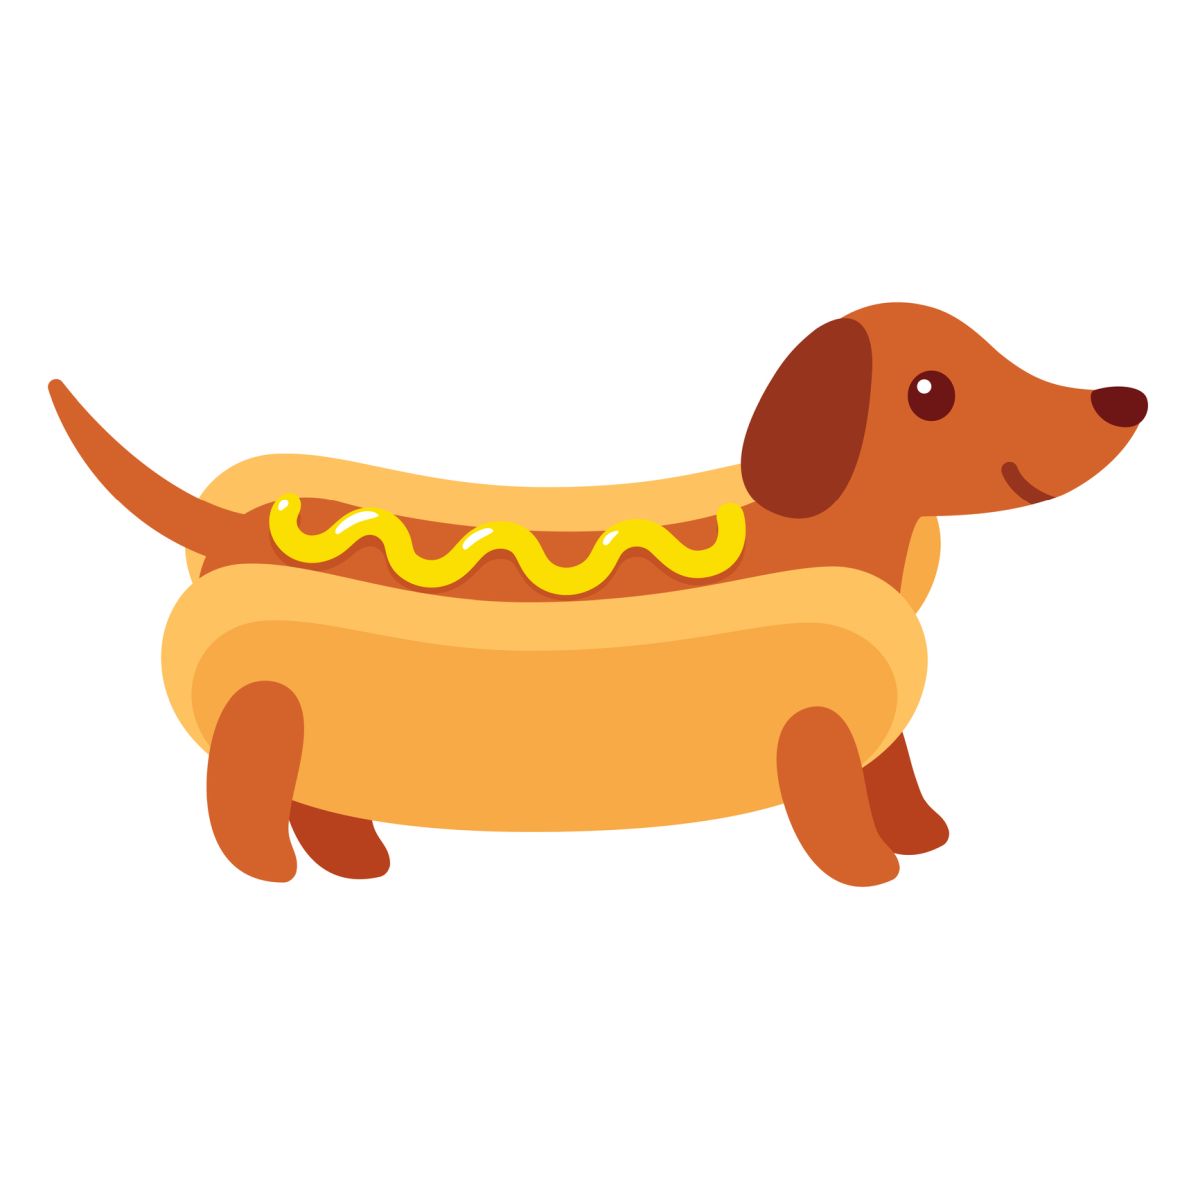 dog in hot dog costume